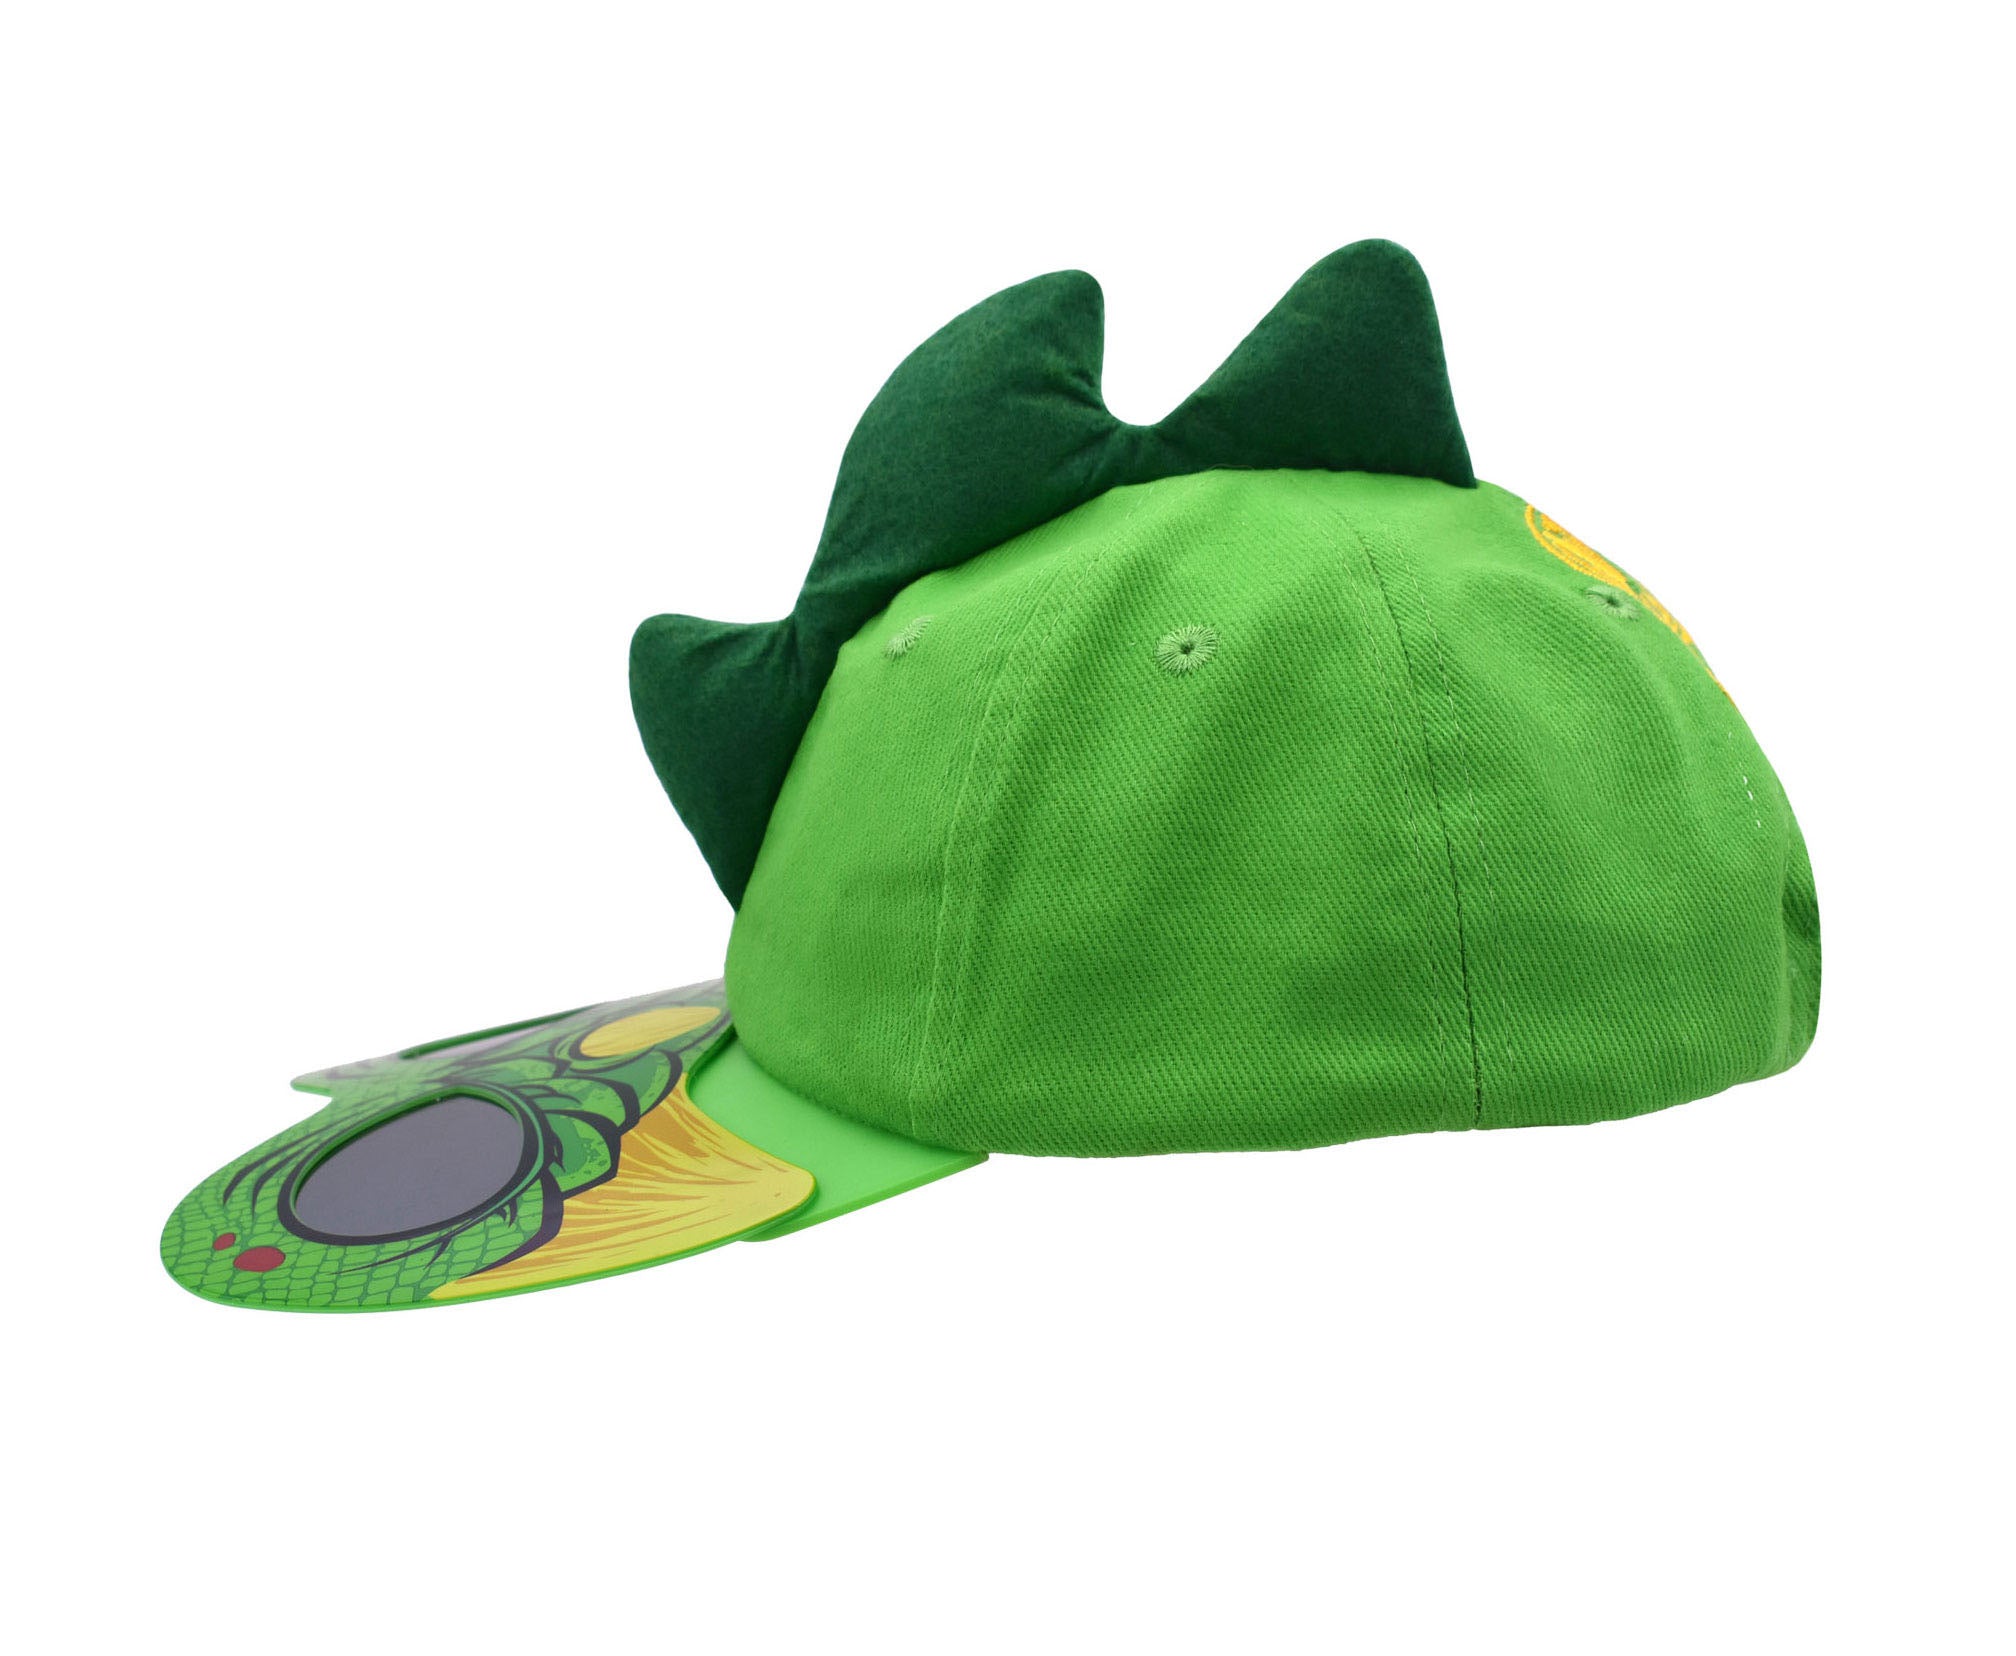 Dinosaur Flip'N Hats (Youth Size)